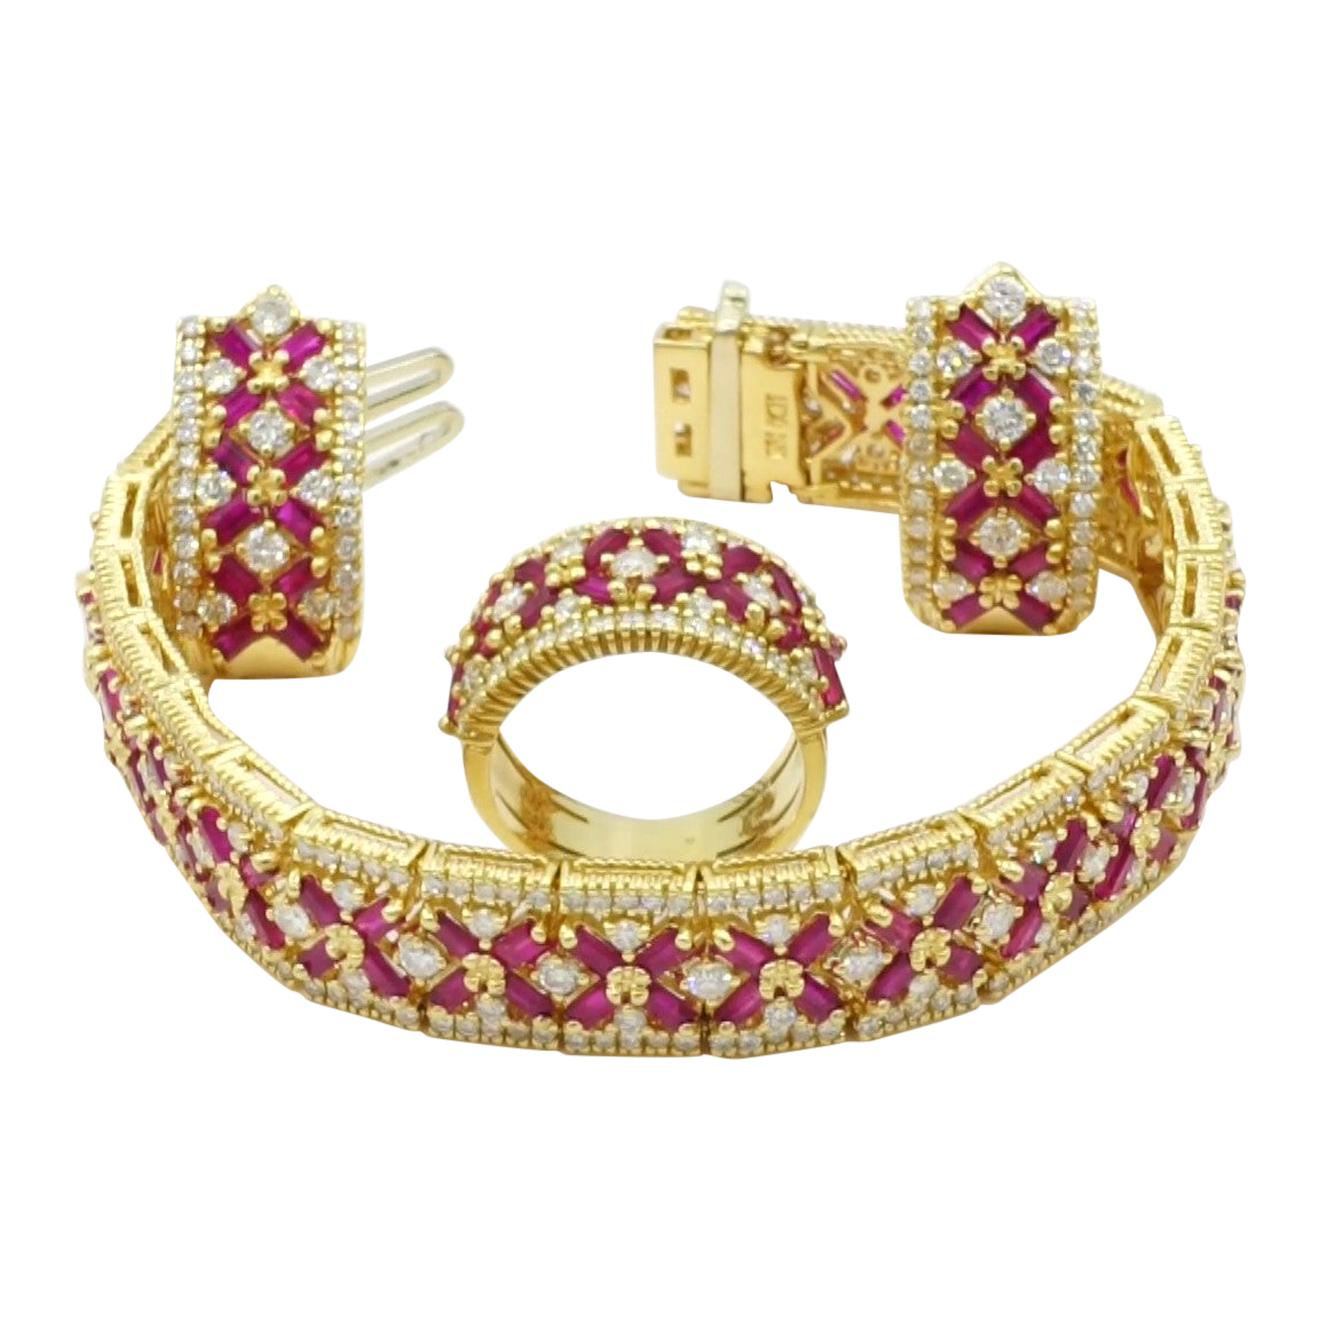 14 Karat Yellow Gold Ruby and Diamond Trio Set Ring, Earrings and Bracelet Set